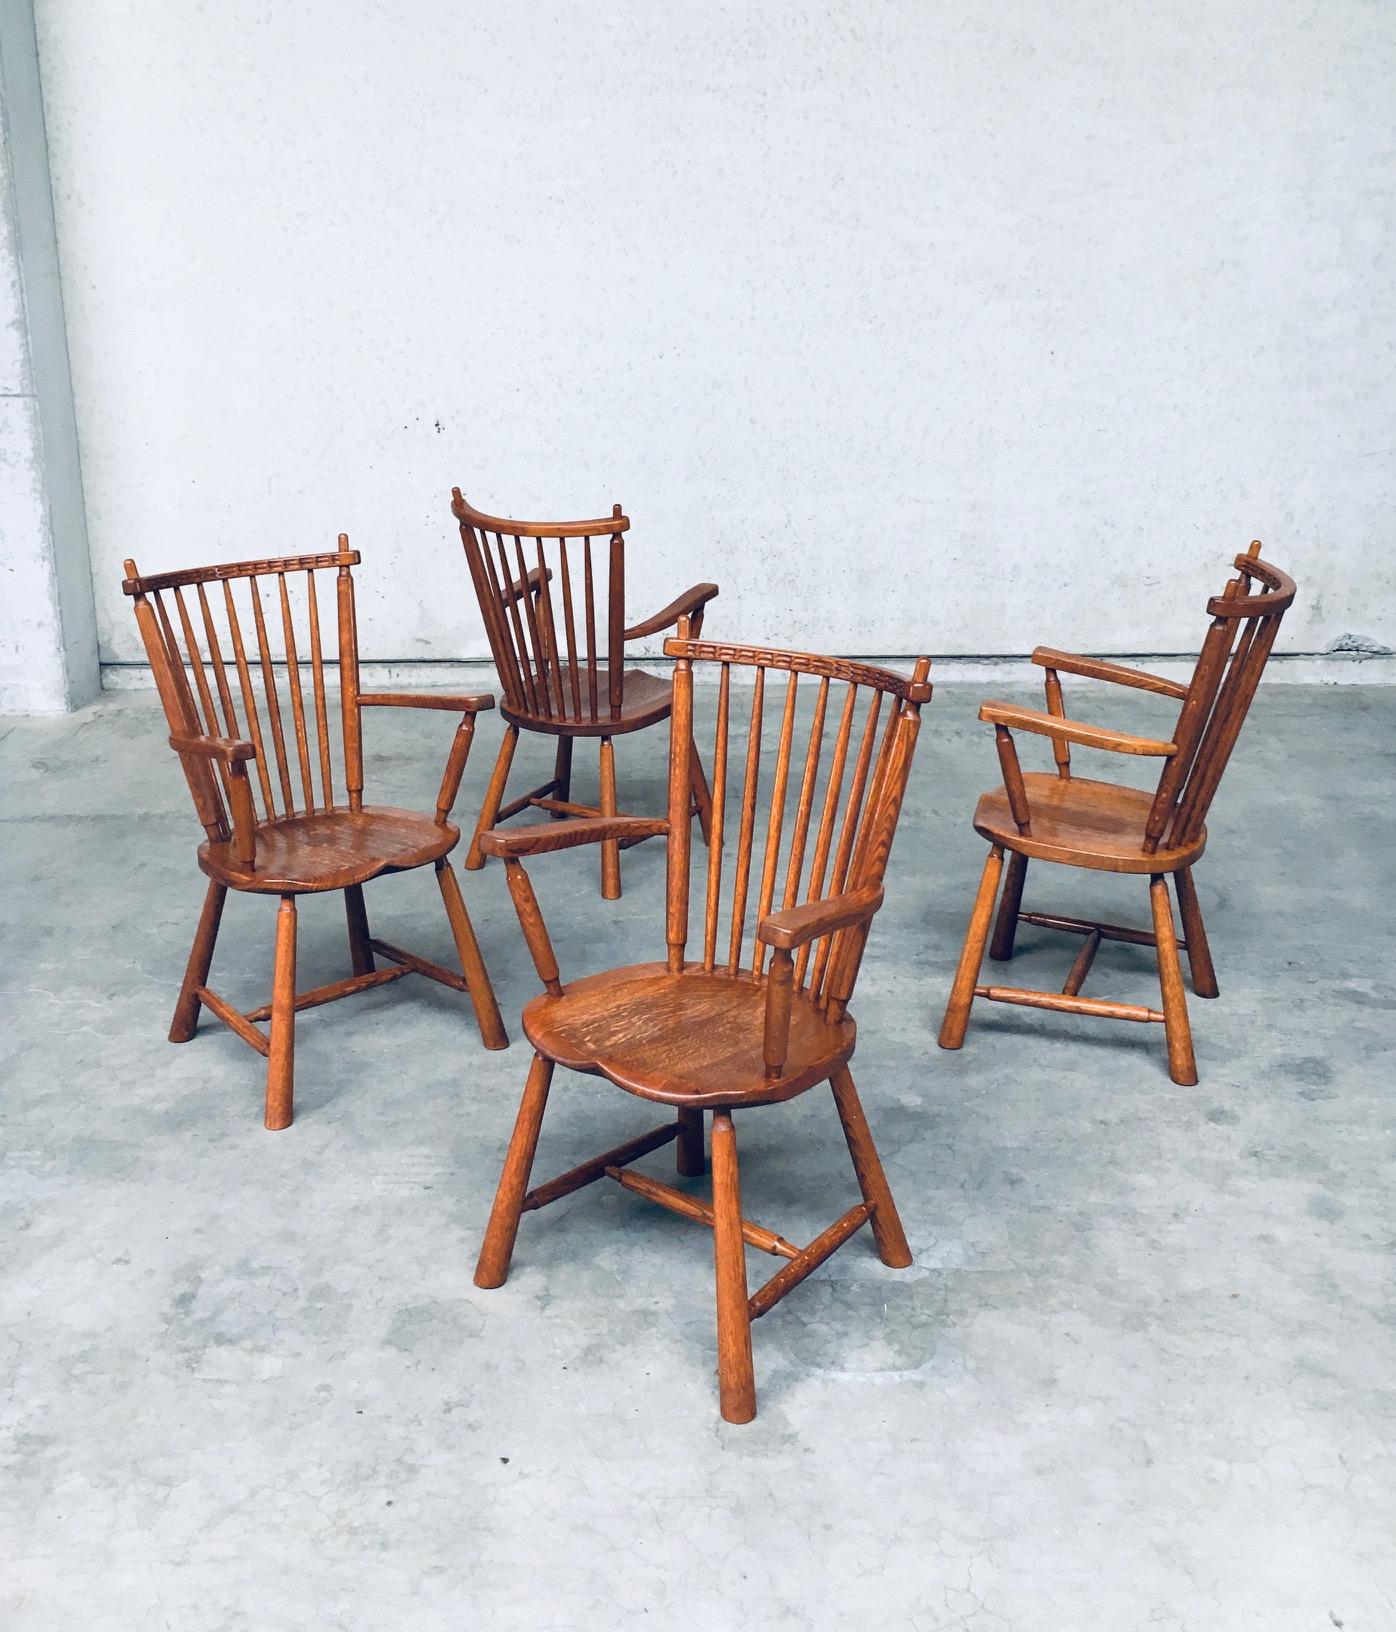 Mid-20th Century Dutch Design Oak Arm Chair set by De Ster Gelderland, Netherlands 1960's For Sale